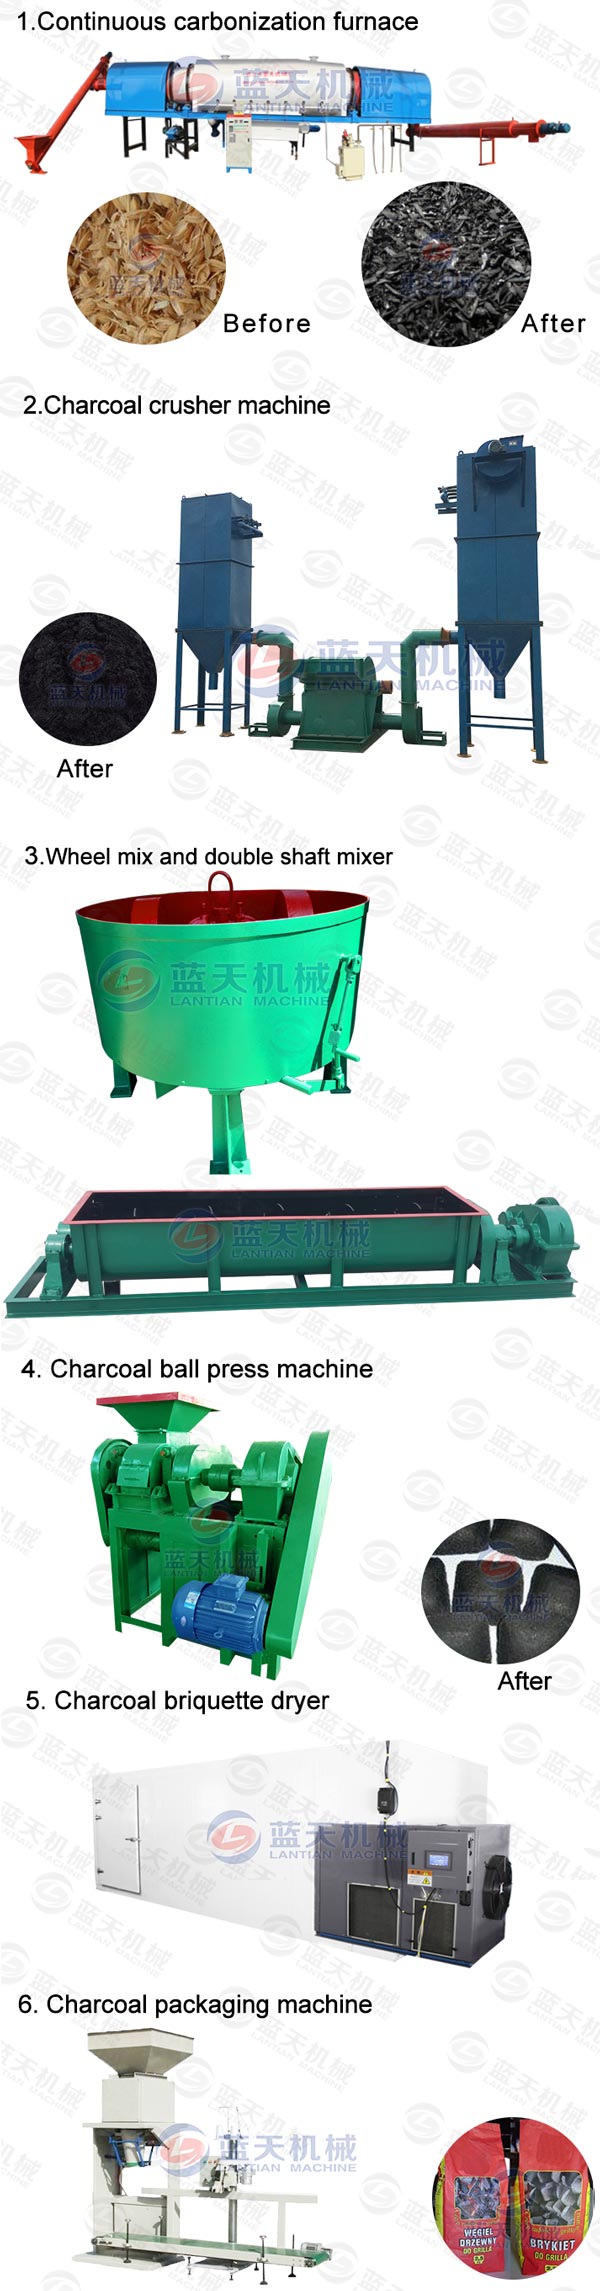 charcoal ball press making machine